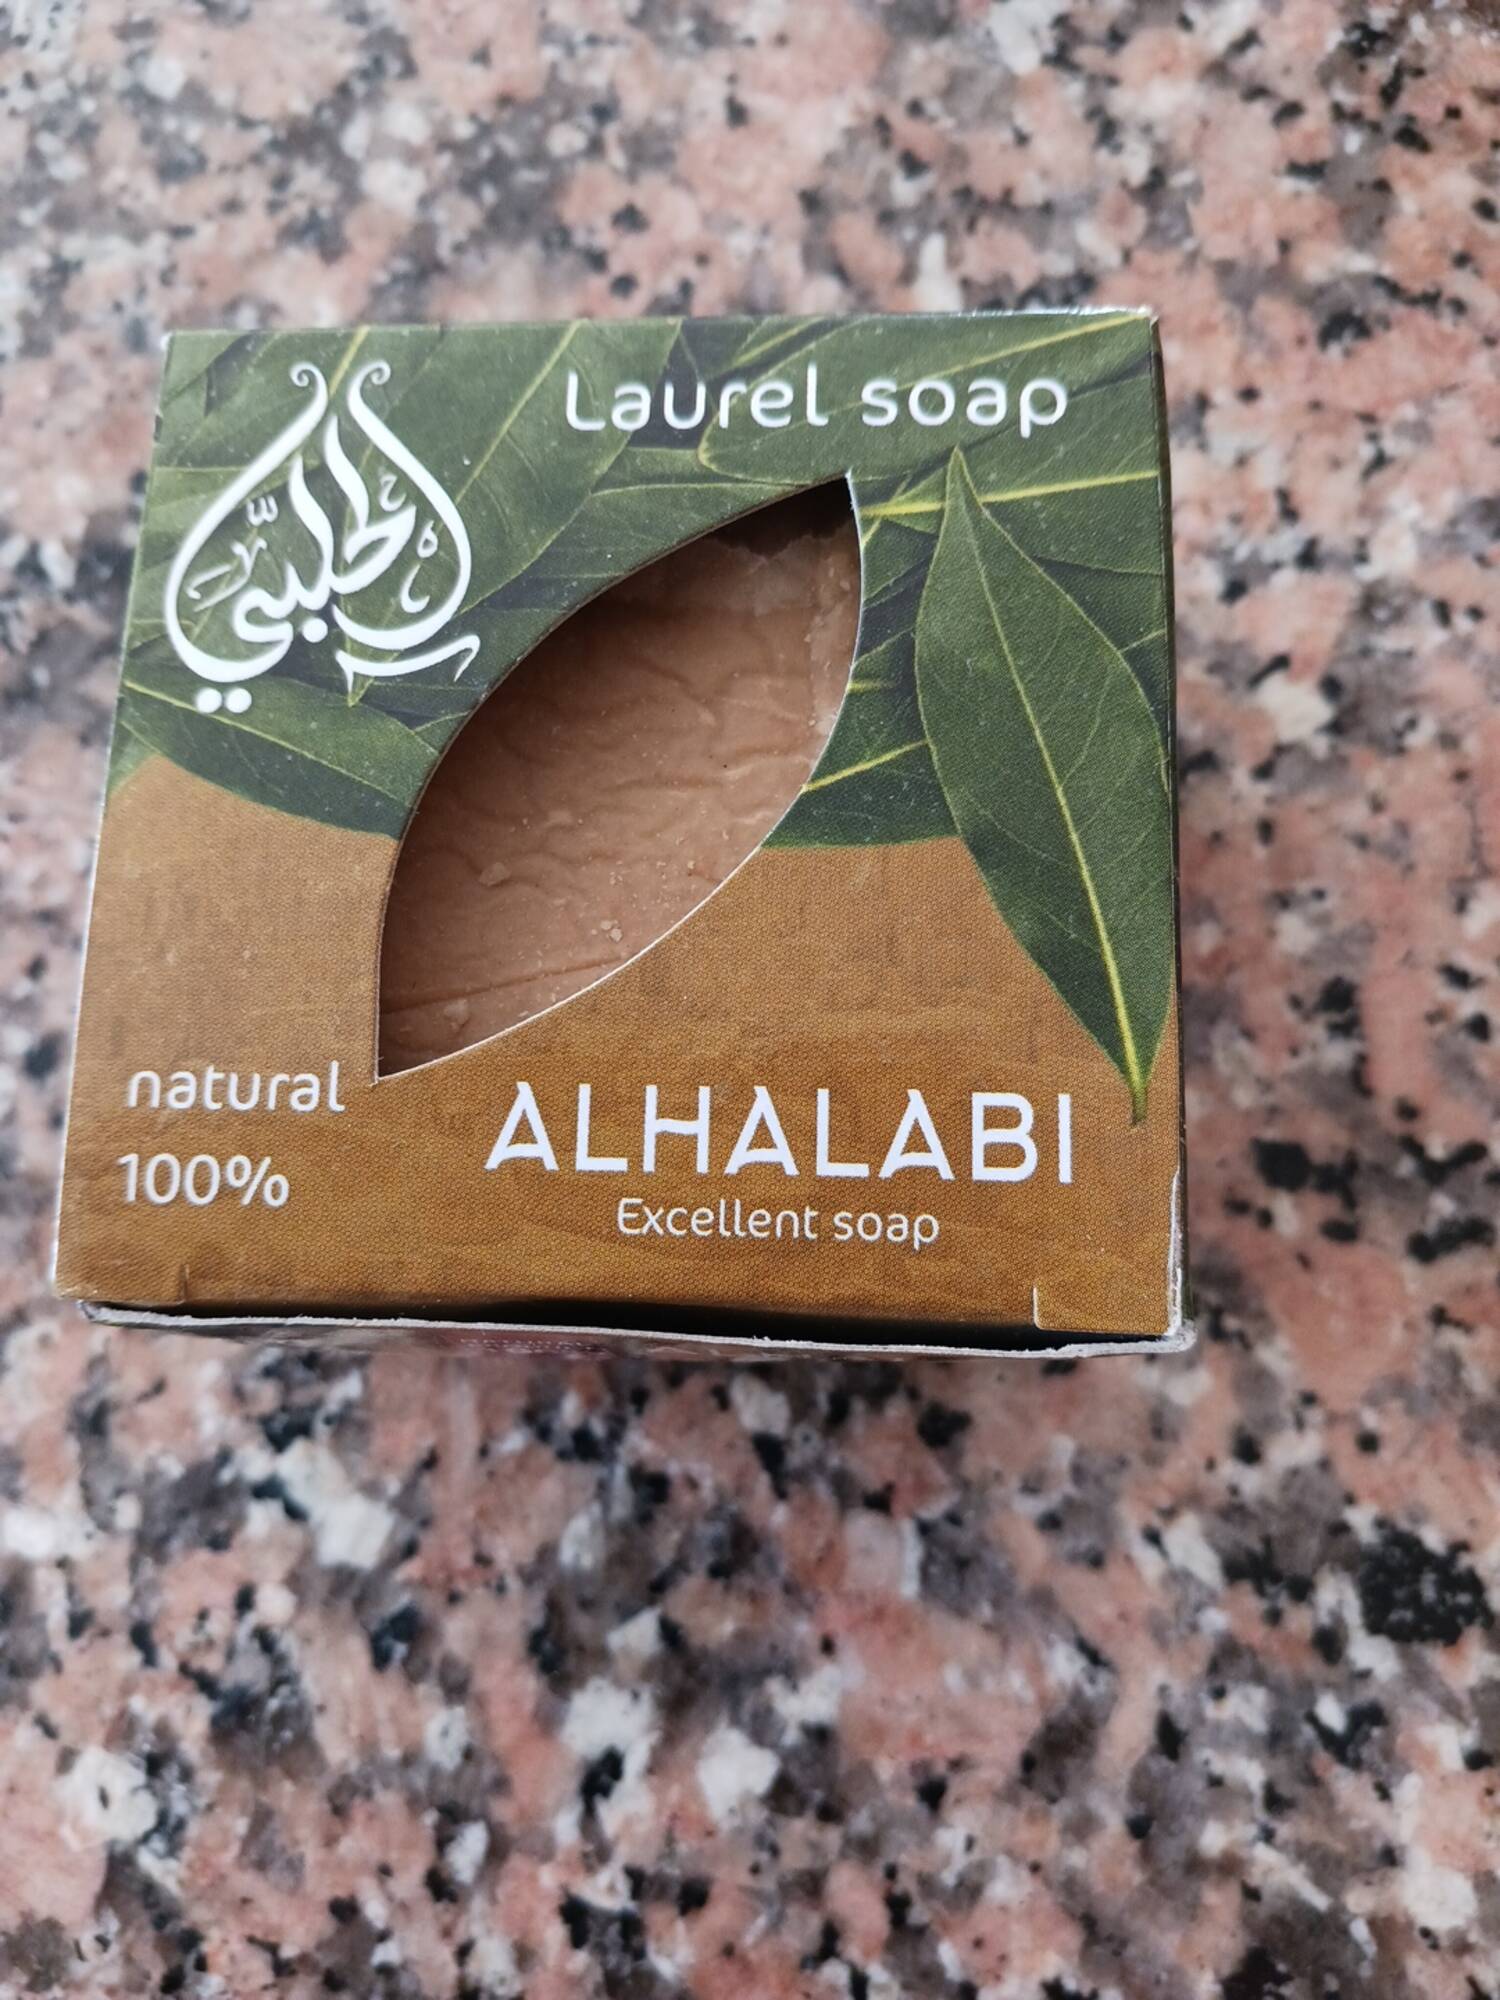 ALHALABI - Laurel soap